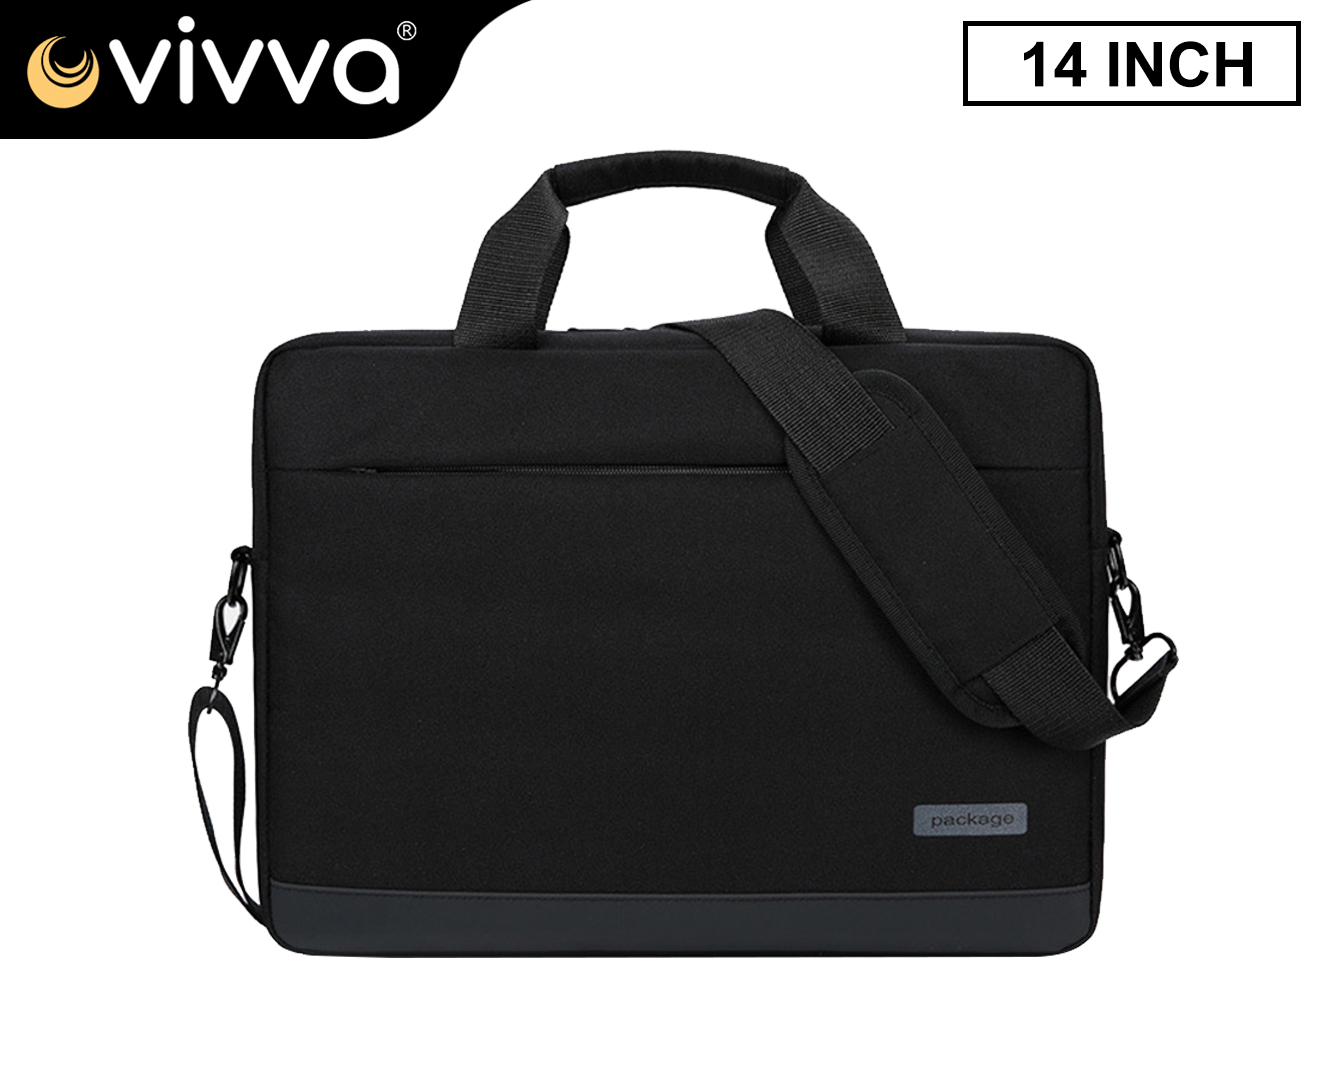 Real Leather Messenger Bag Fits 13 Inch Laptop MacBook | Men Women Teens  College | eBay